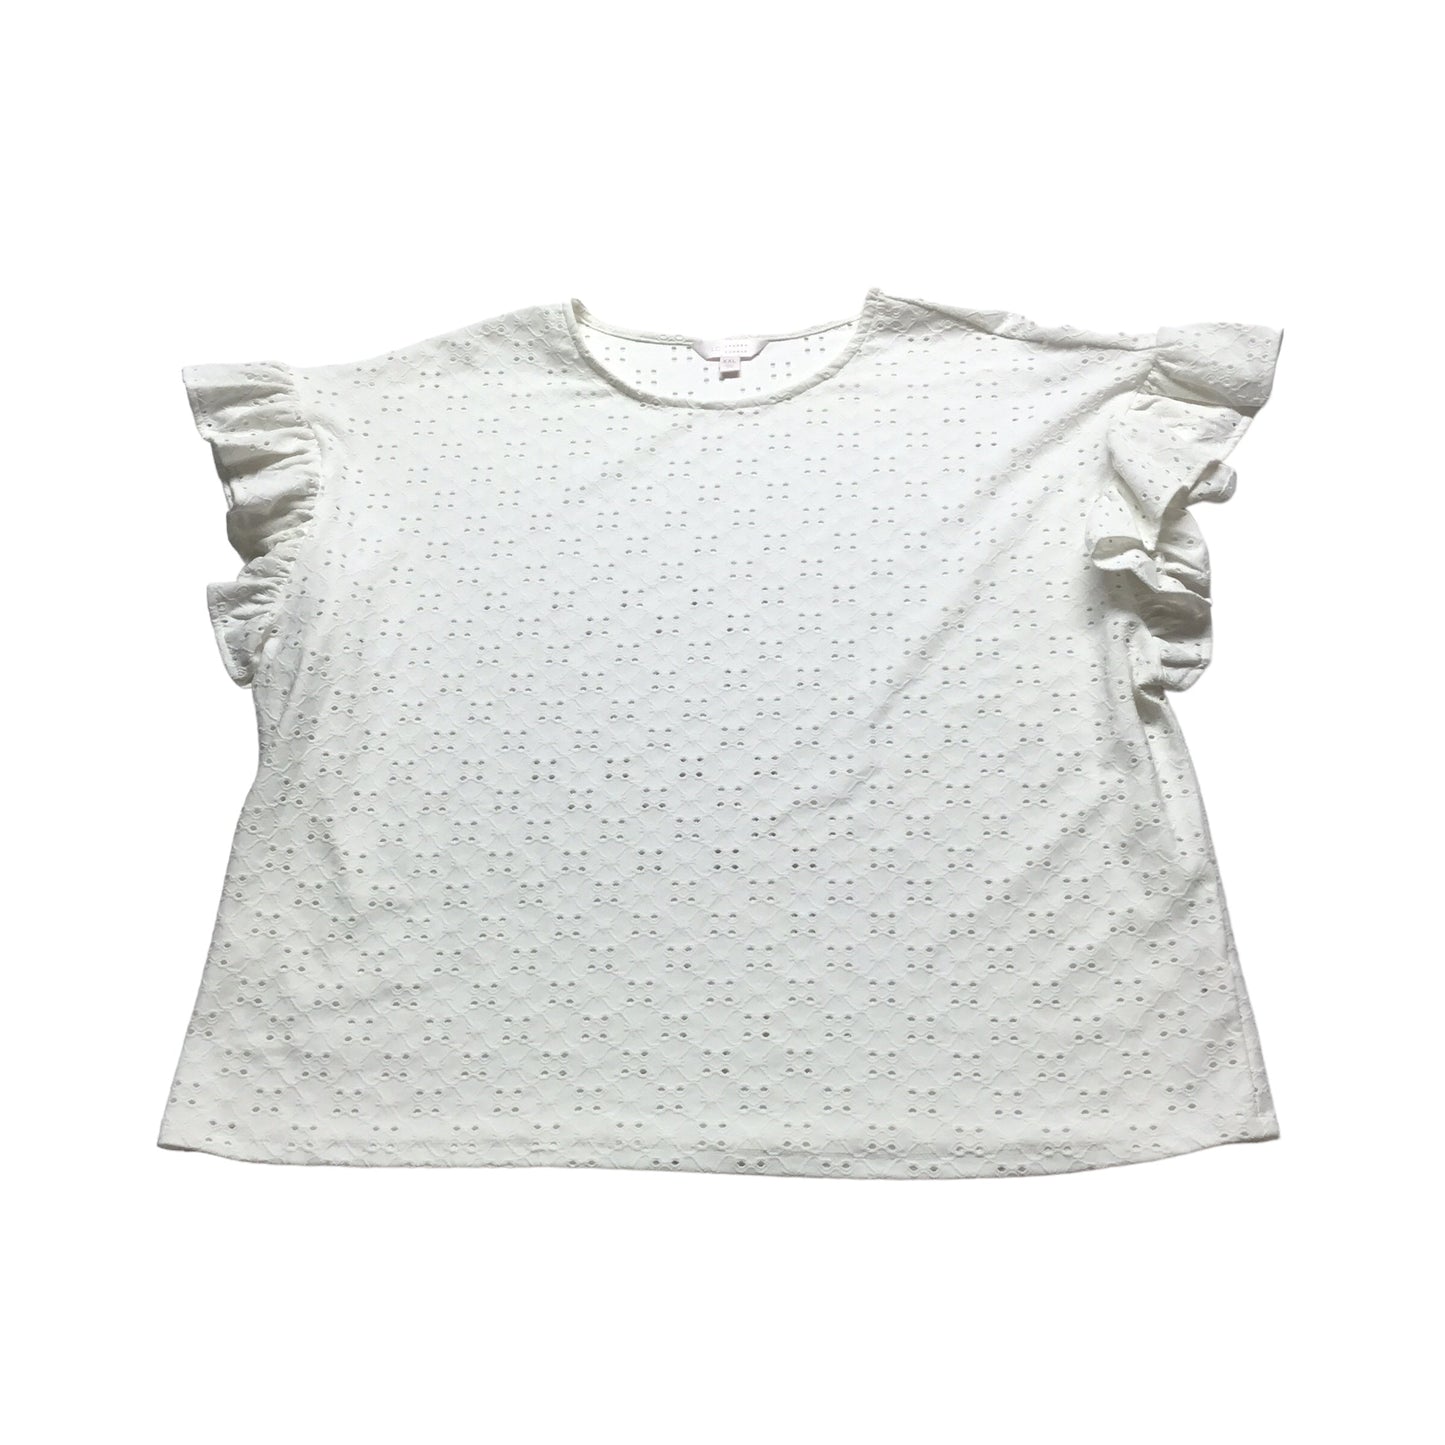 White Top Short Sleeve Lc Lauren Conrad, Size Xxl